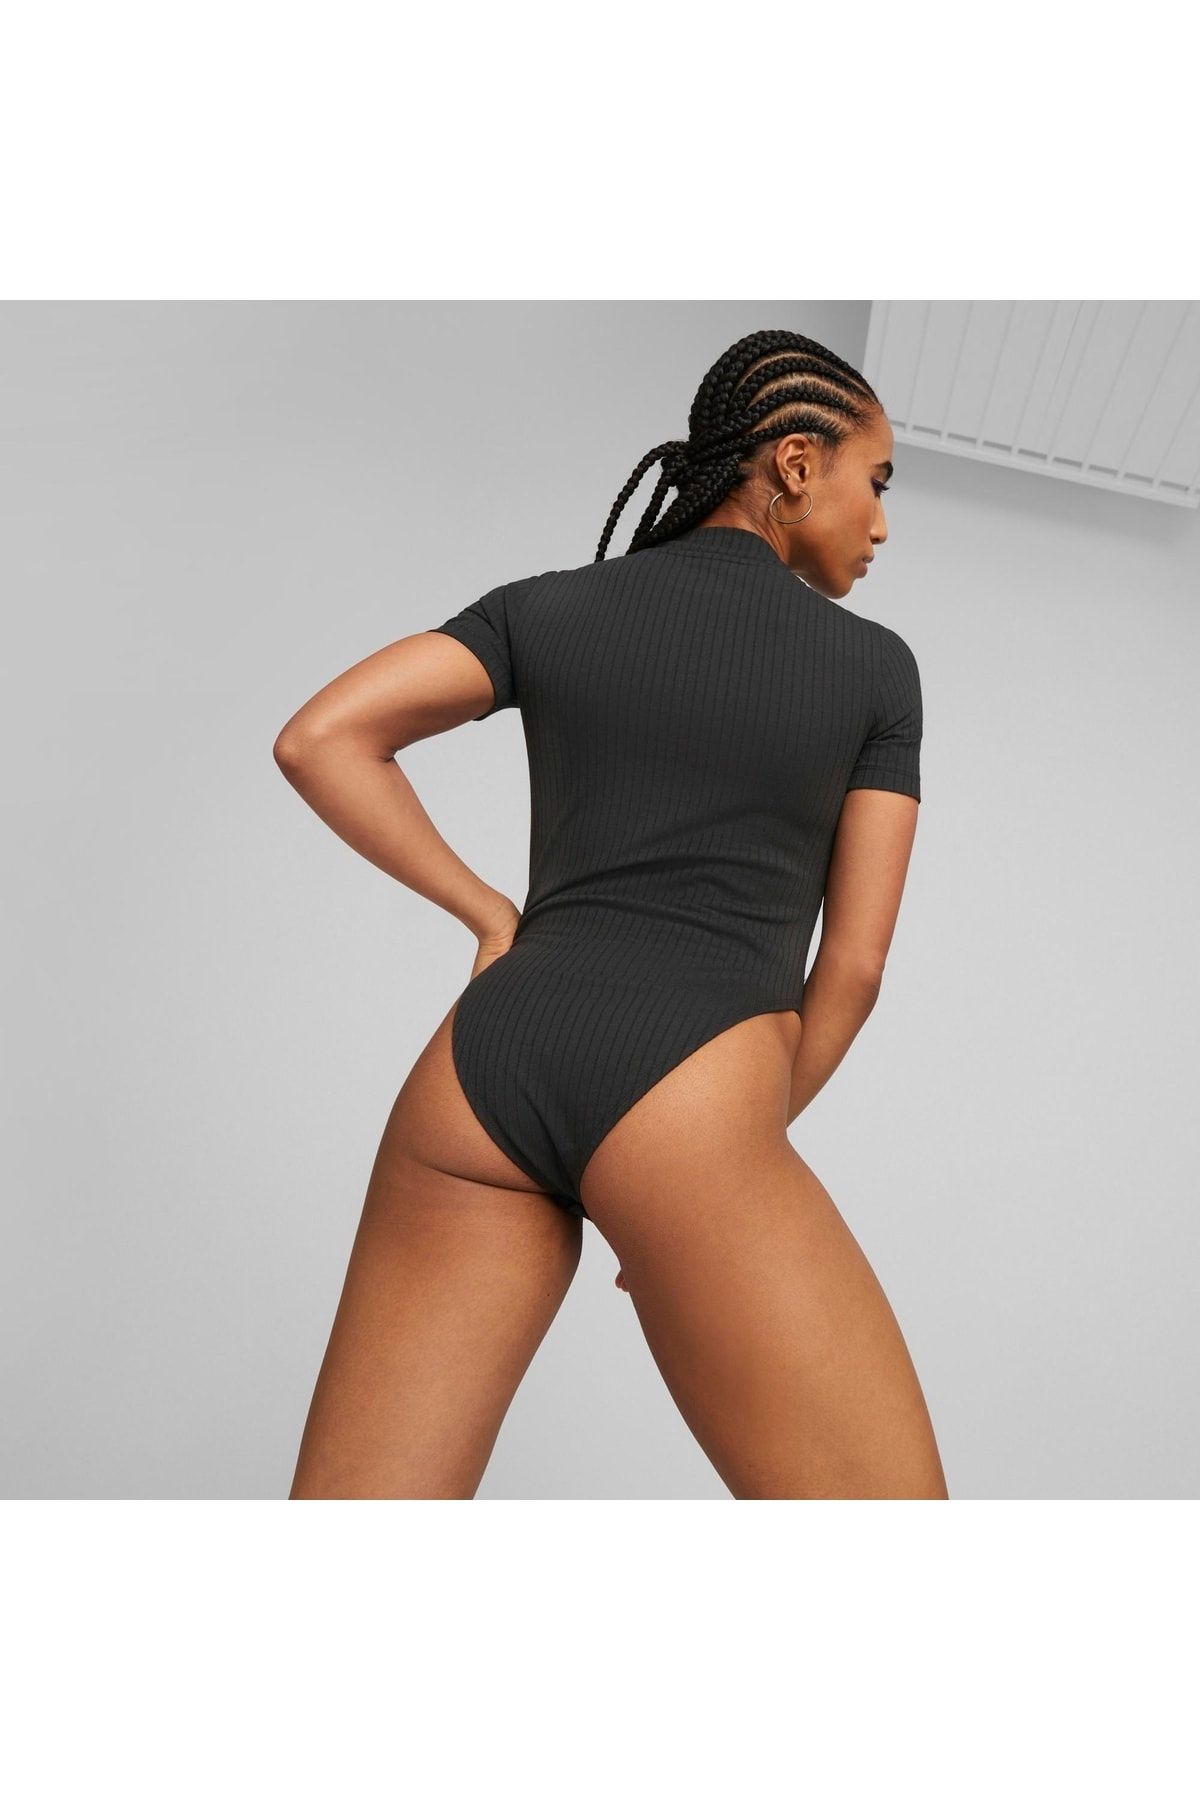 PUMA CLASSICS Ribbed Bodysuit, Black Women's